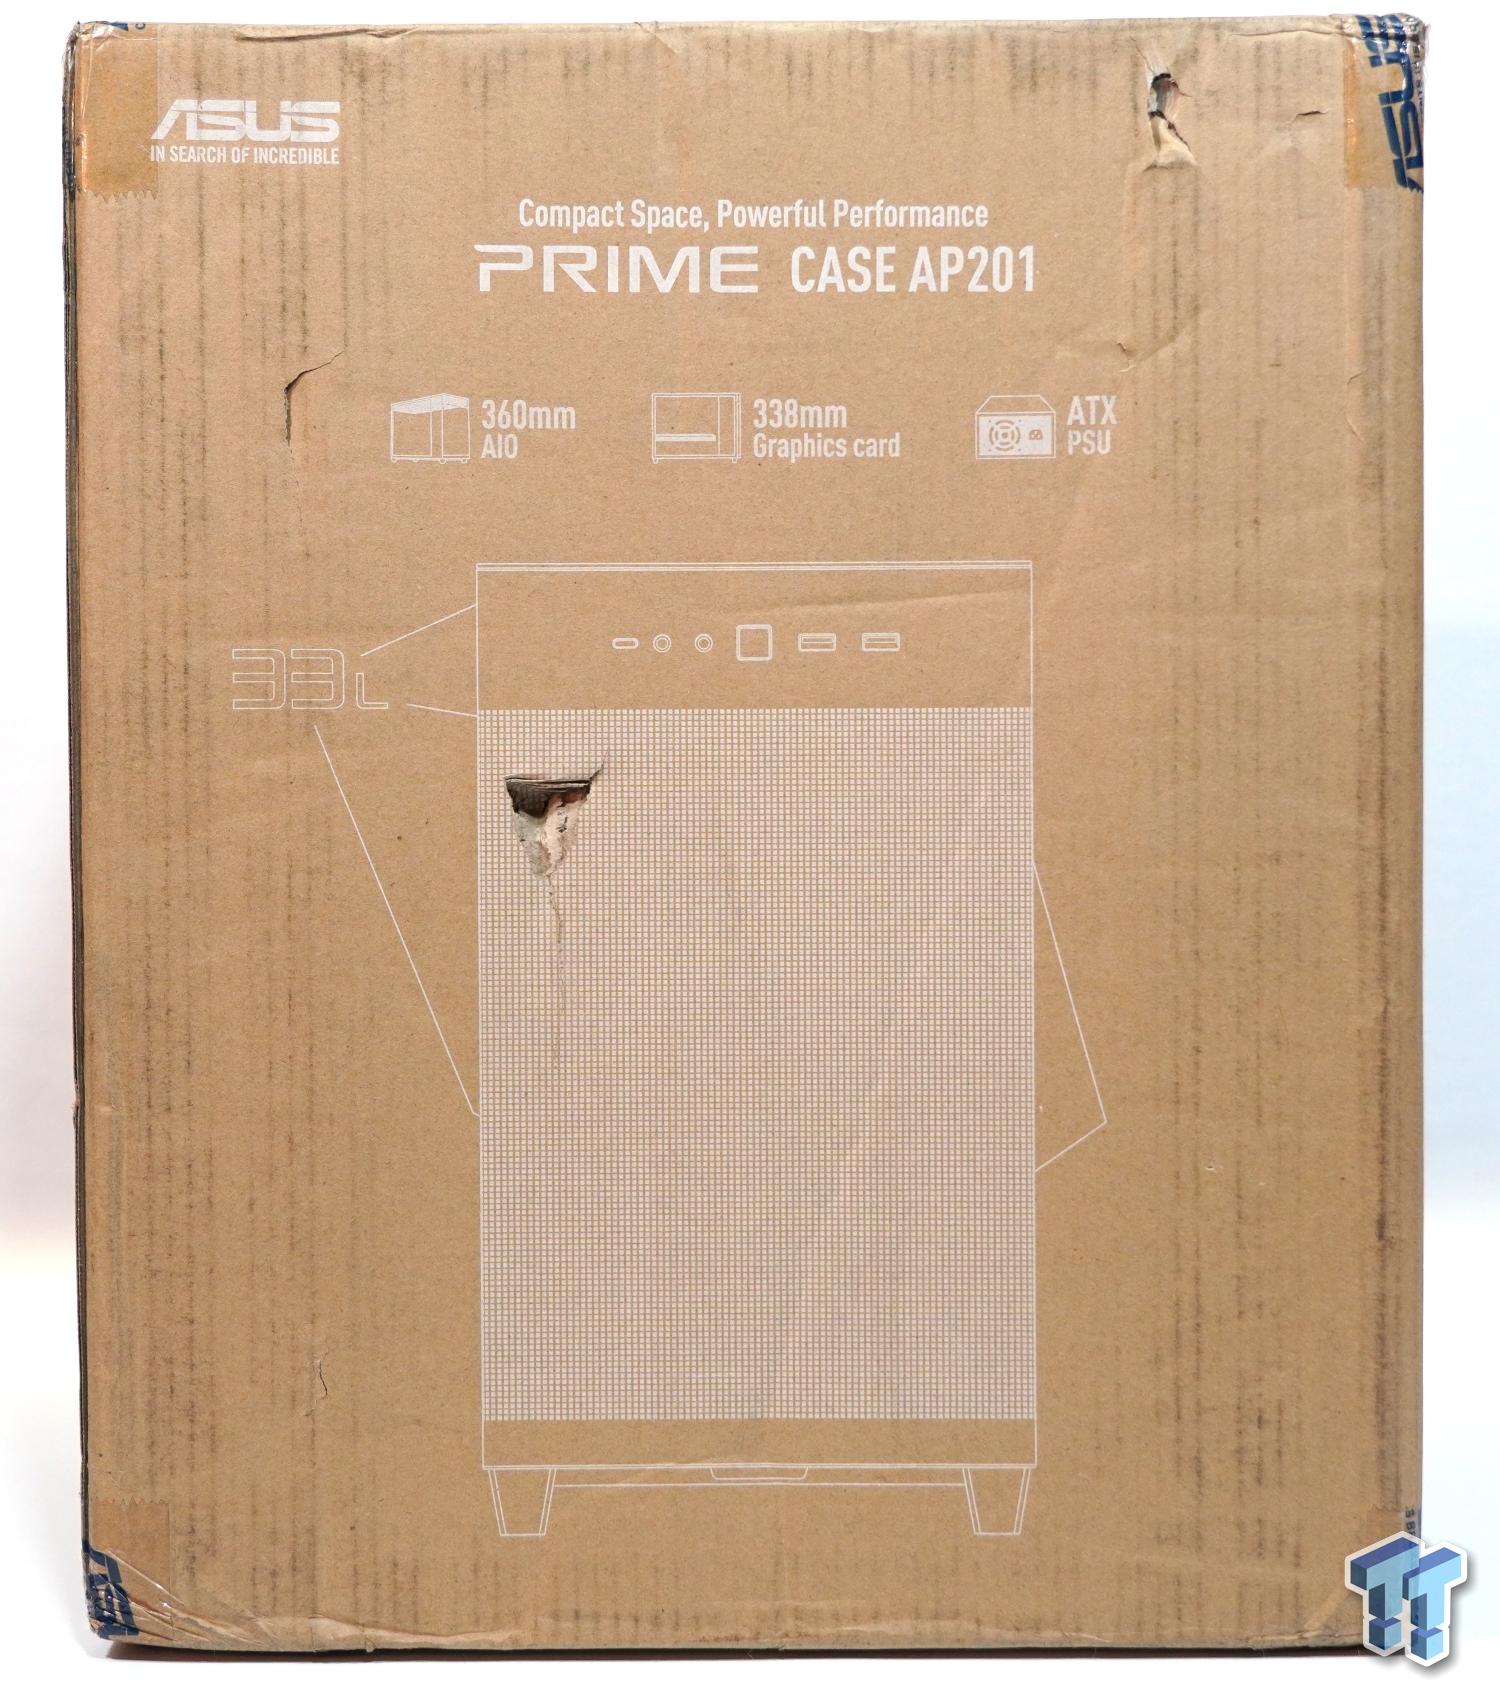 Asus Prime AP201 Case Review. All PROS No CONS! 